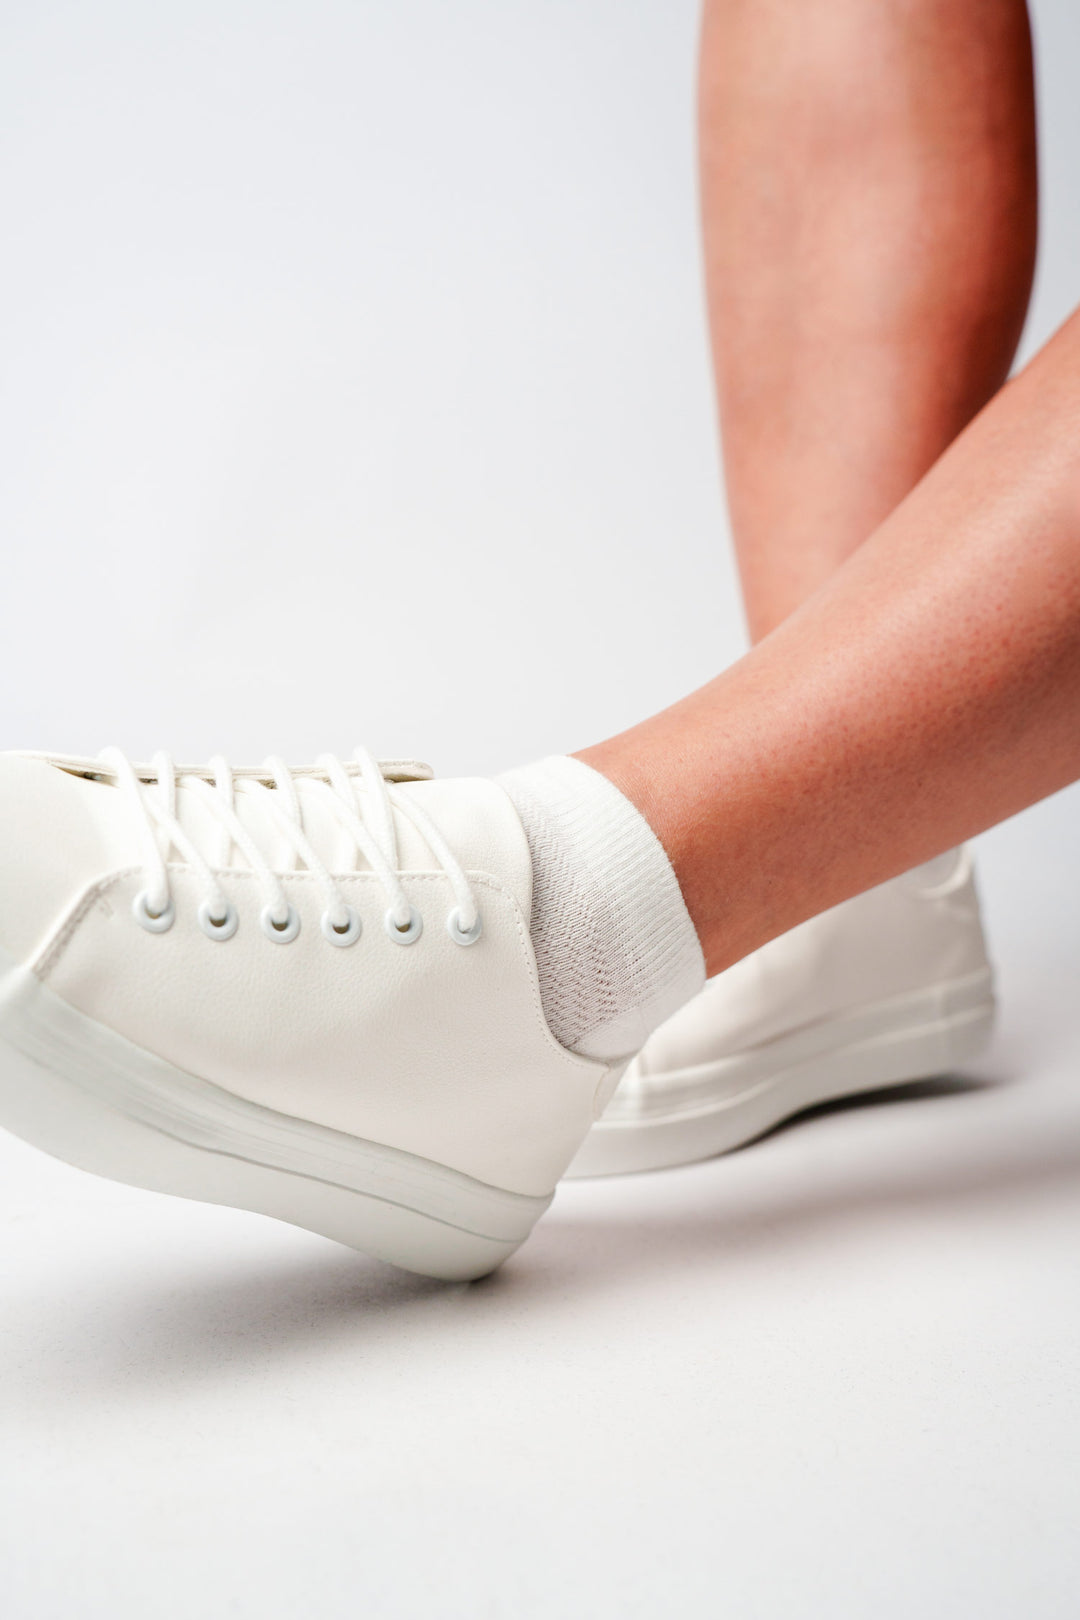 DIXXSON Sneaker Socken - weiß - super bequem